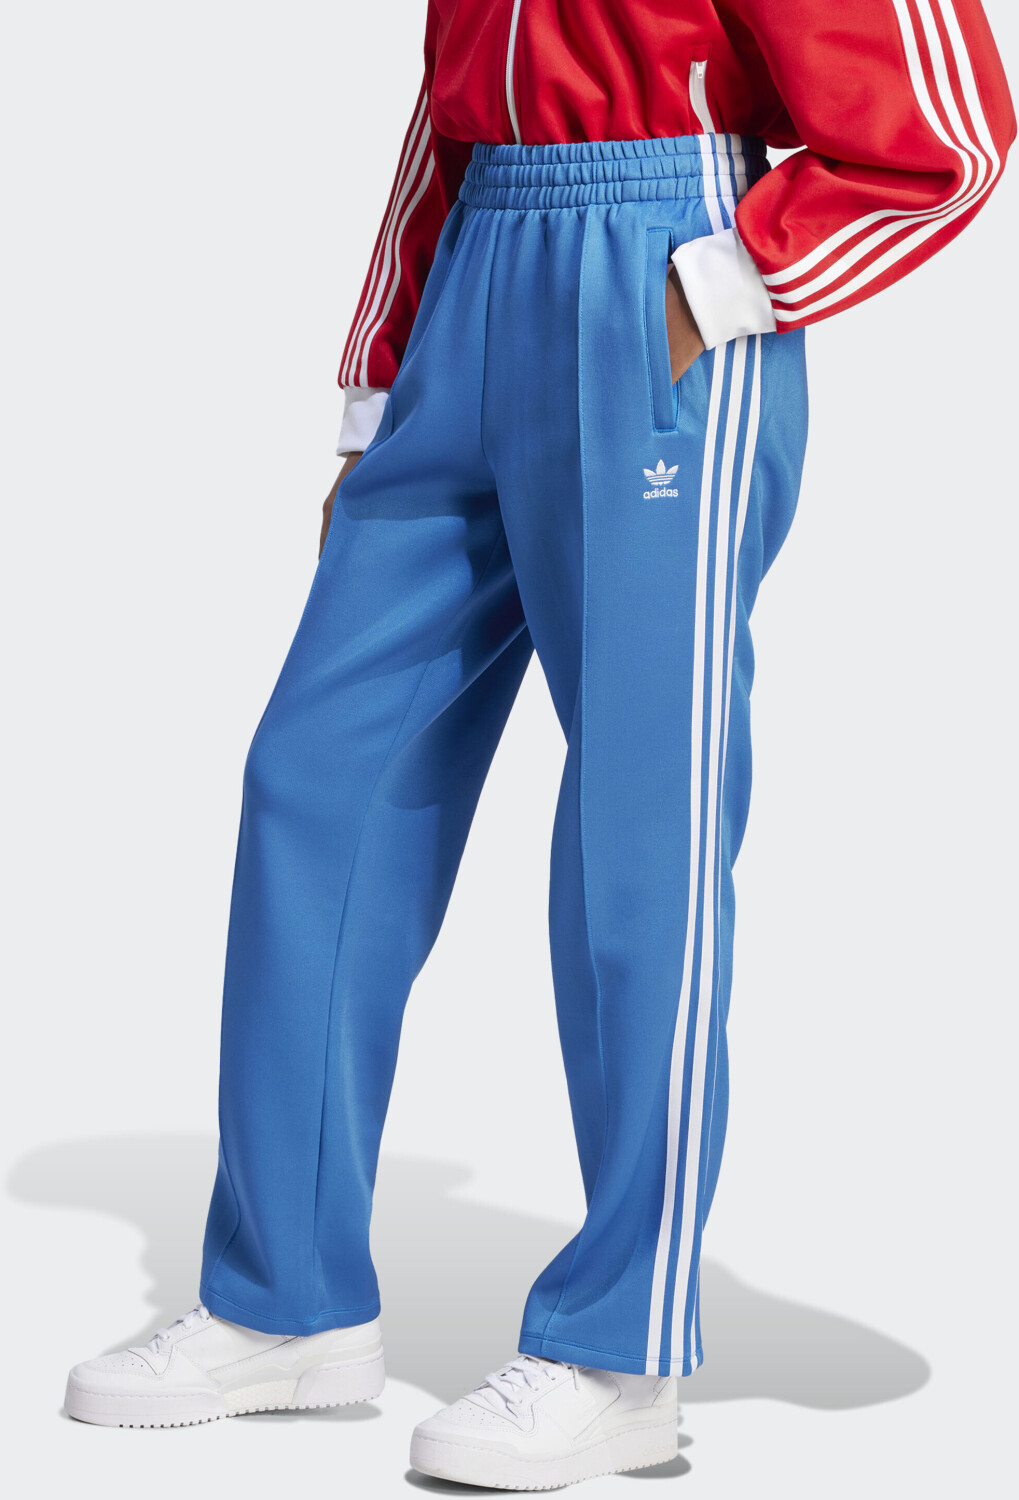 Adidas Woman adicolor Classics (II0727) blue SST 80,00 € Preisvergleich ab Training Pants bei Oversized | bird